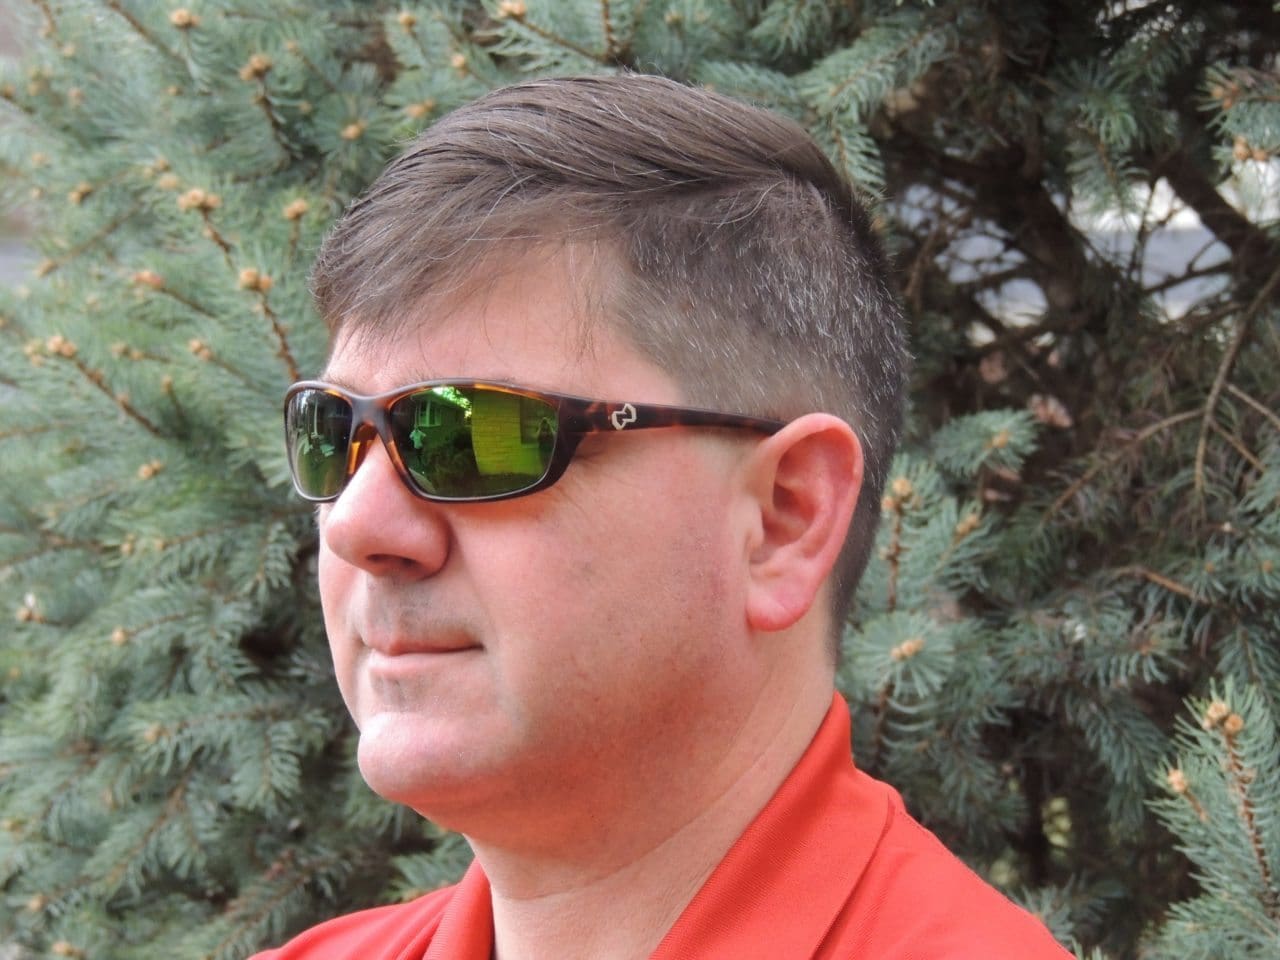 High Gear: Eldo fly-fishing sunglasses from Native Eyewear